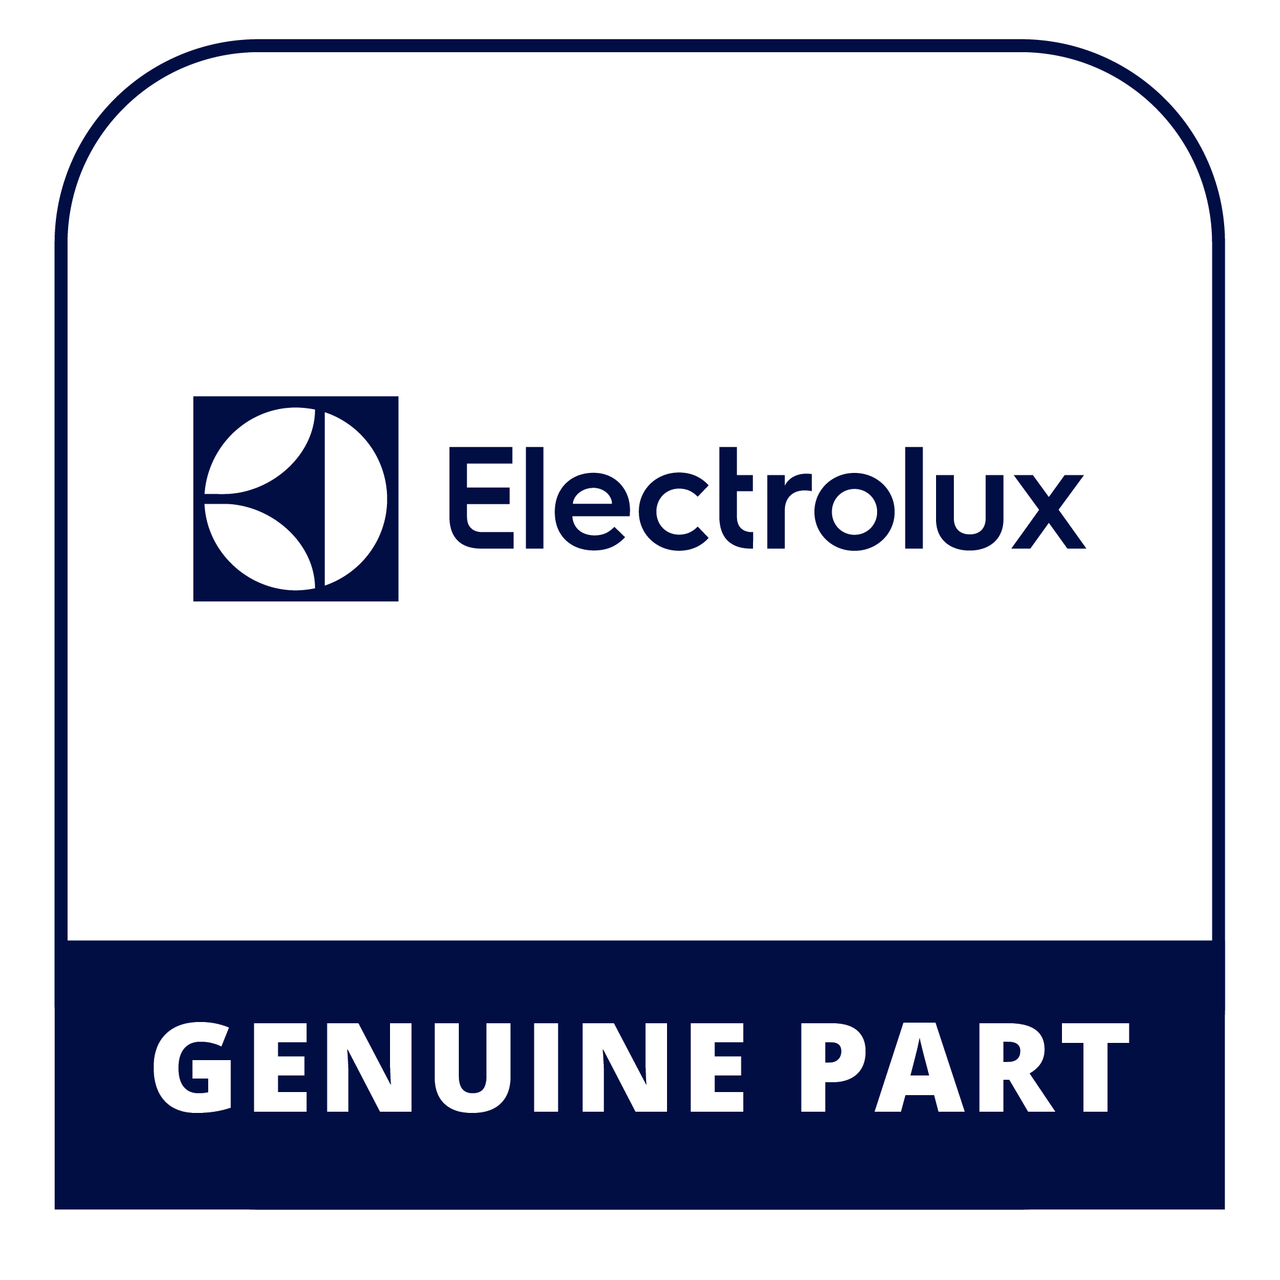 Frigidaire - Electrolux 5304498923 Cover - Genuine Electrolux Part